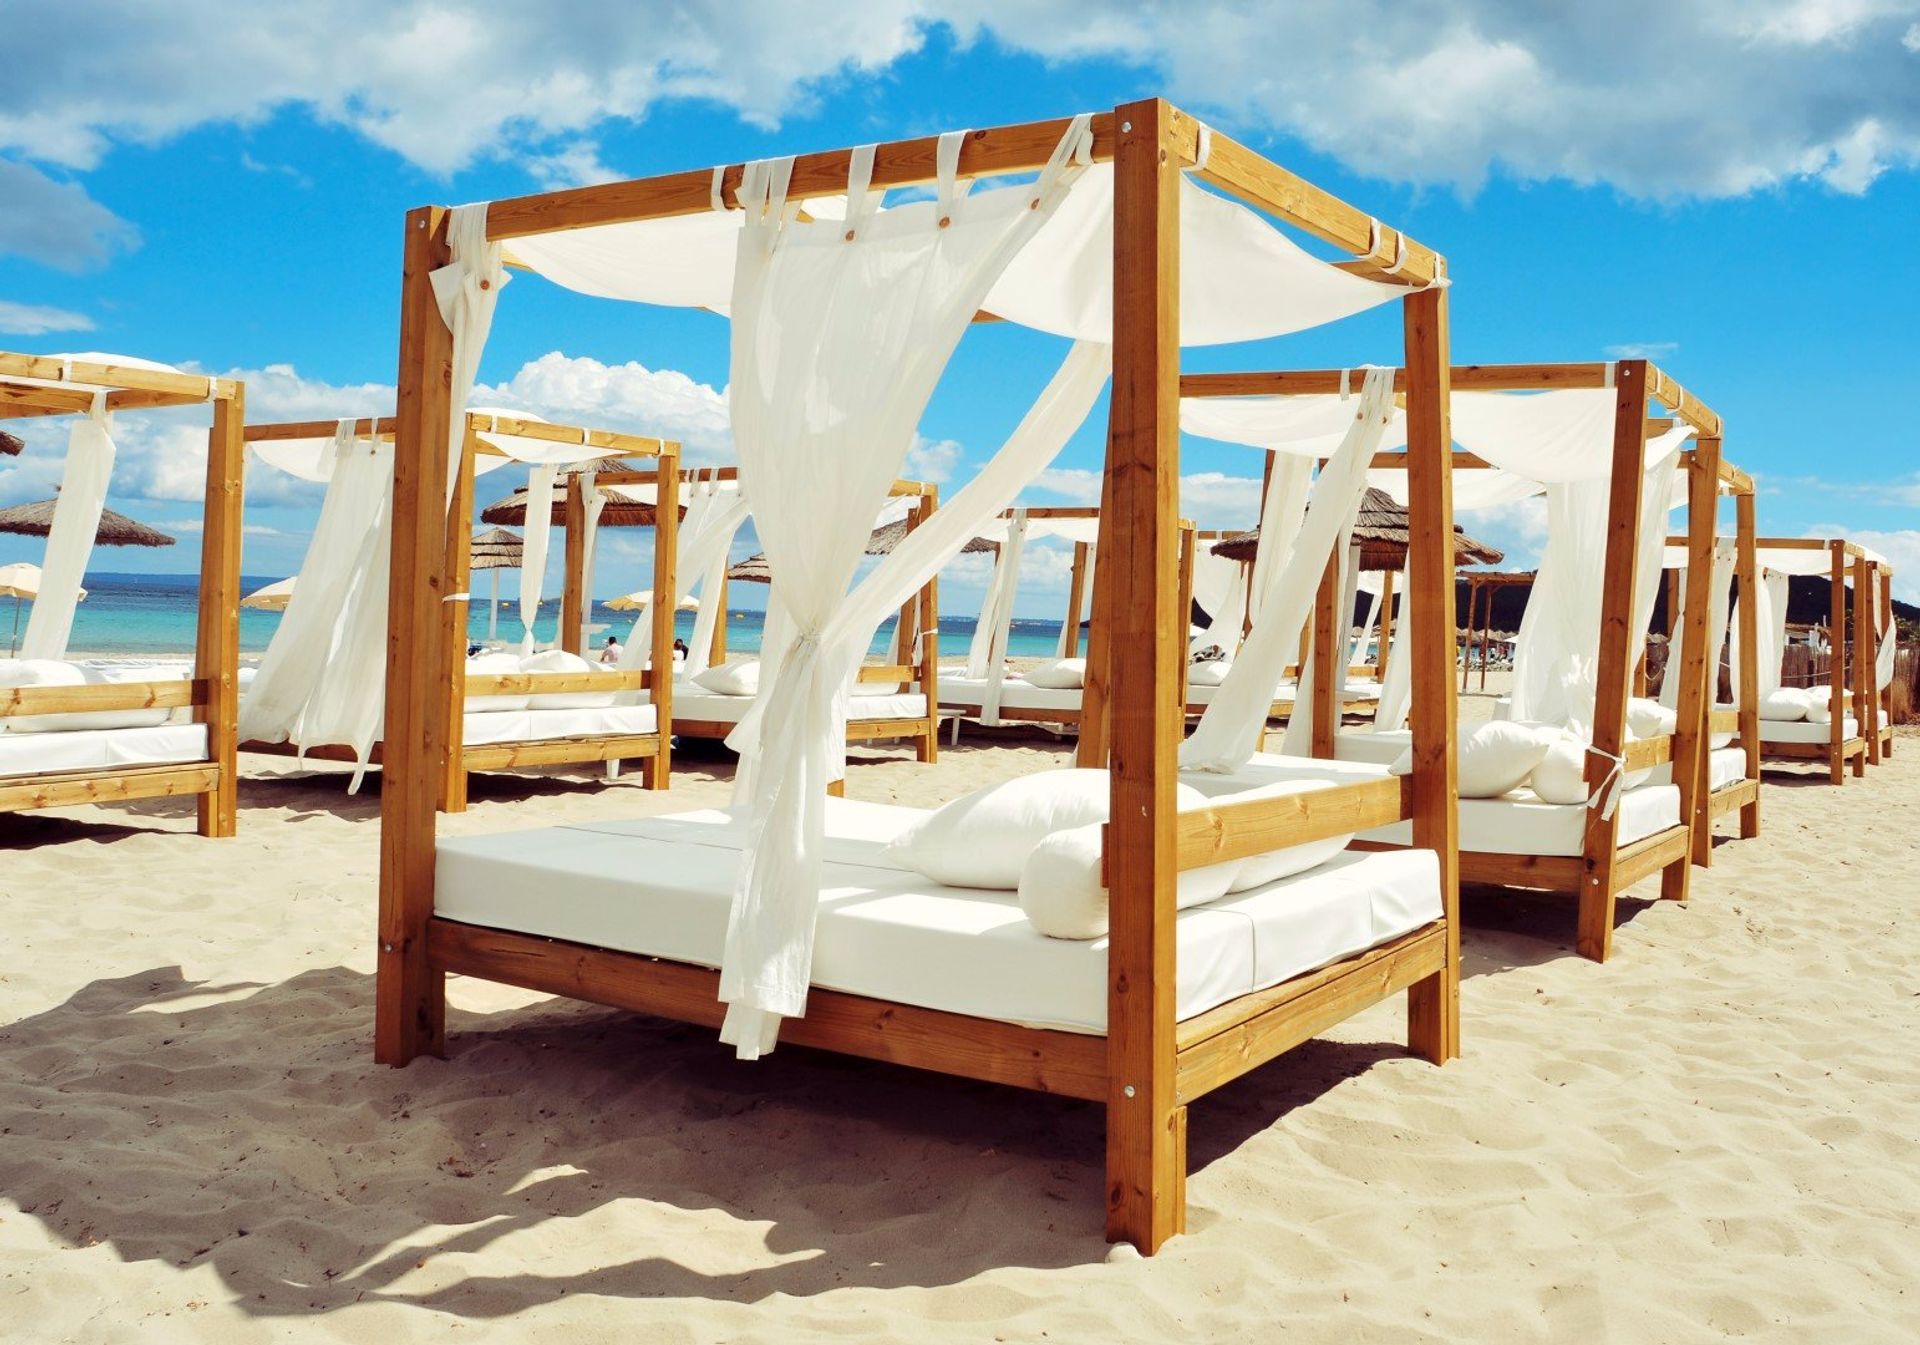 The luxury sun beds of Playa d'en Bossa beach